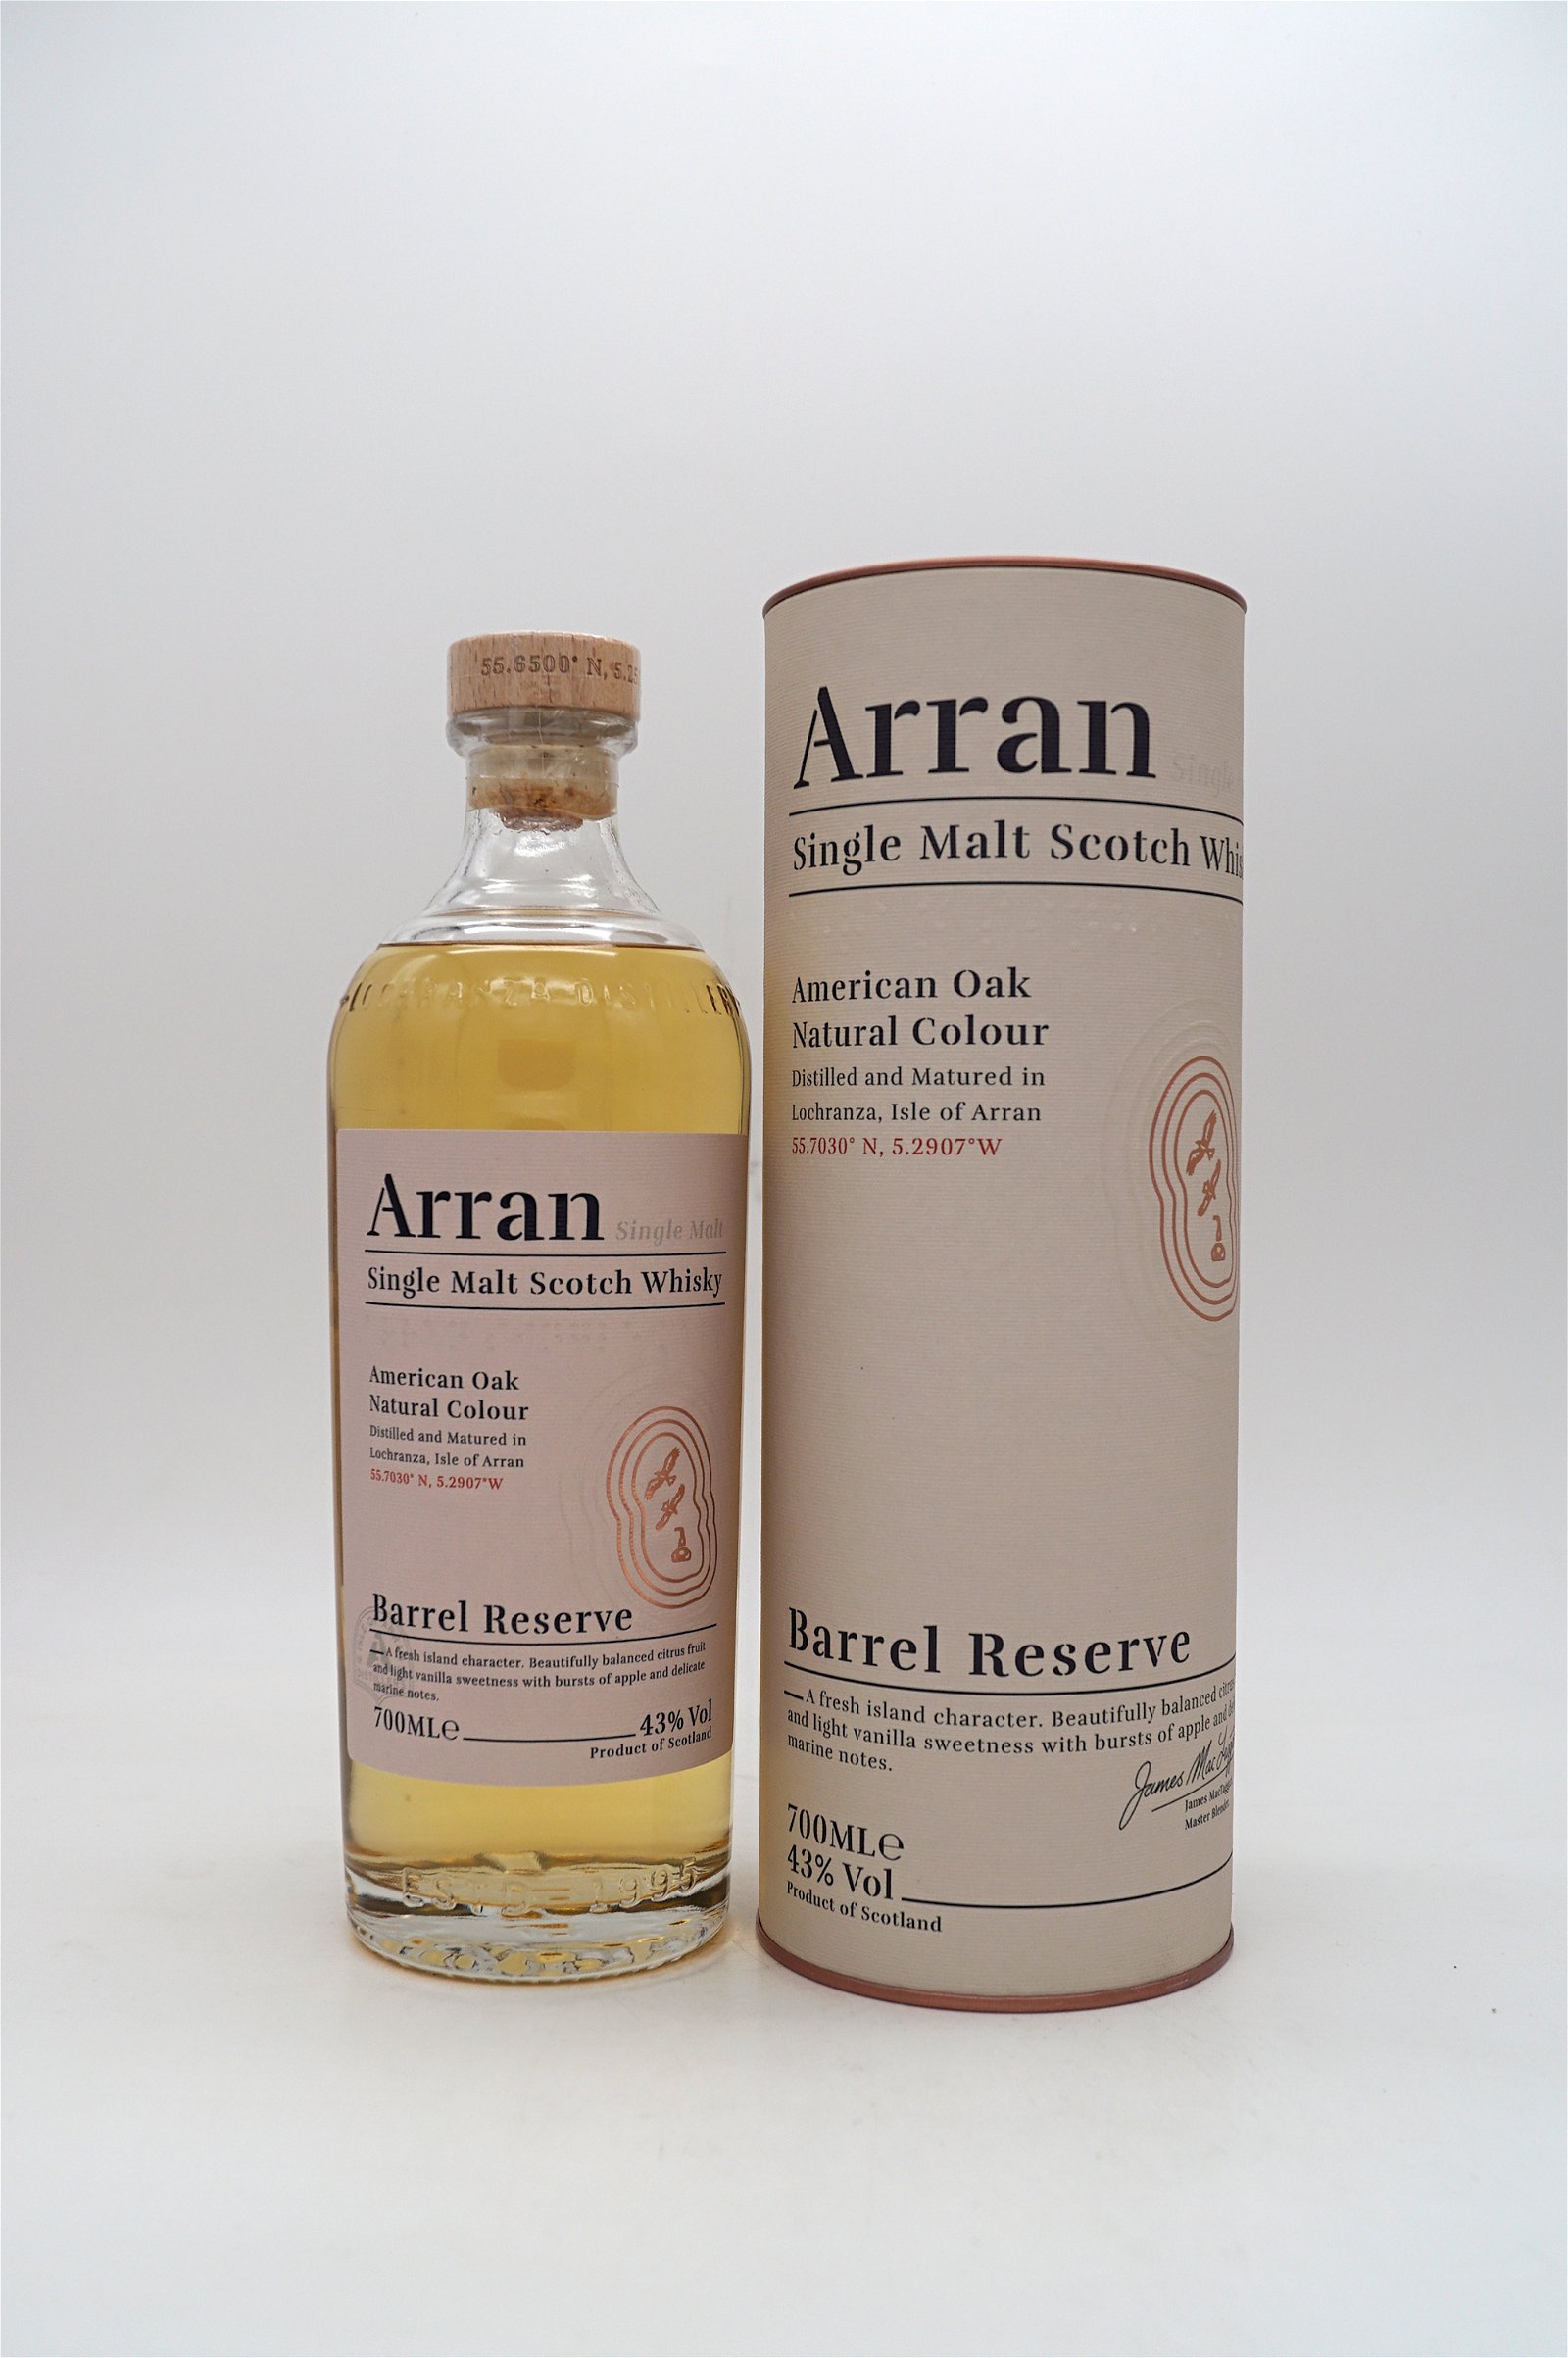 The Arran Barrel Reserve Single Malt Scotch Whisky 